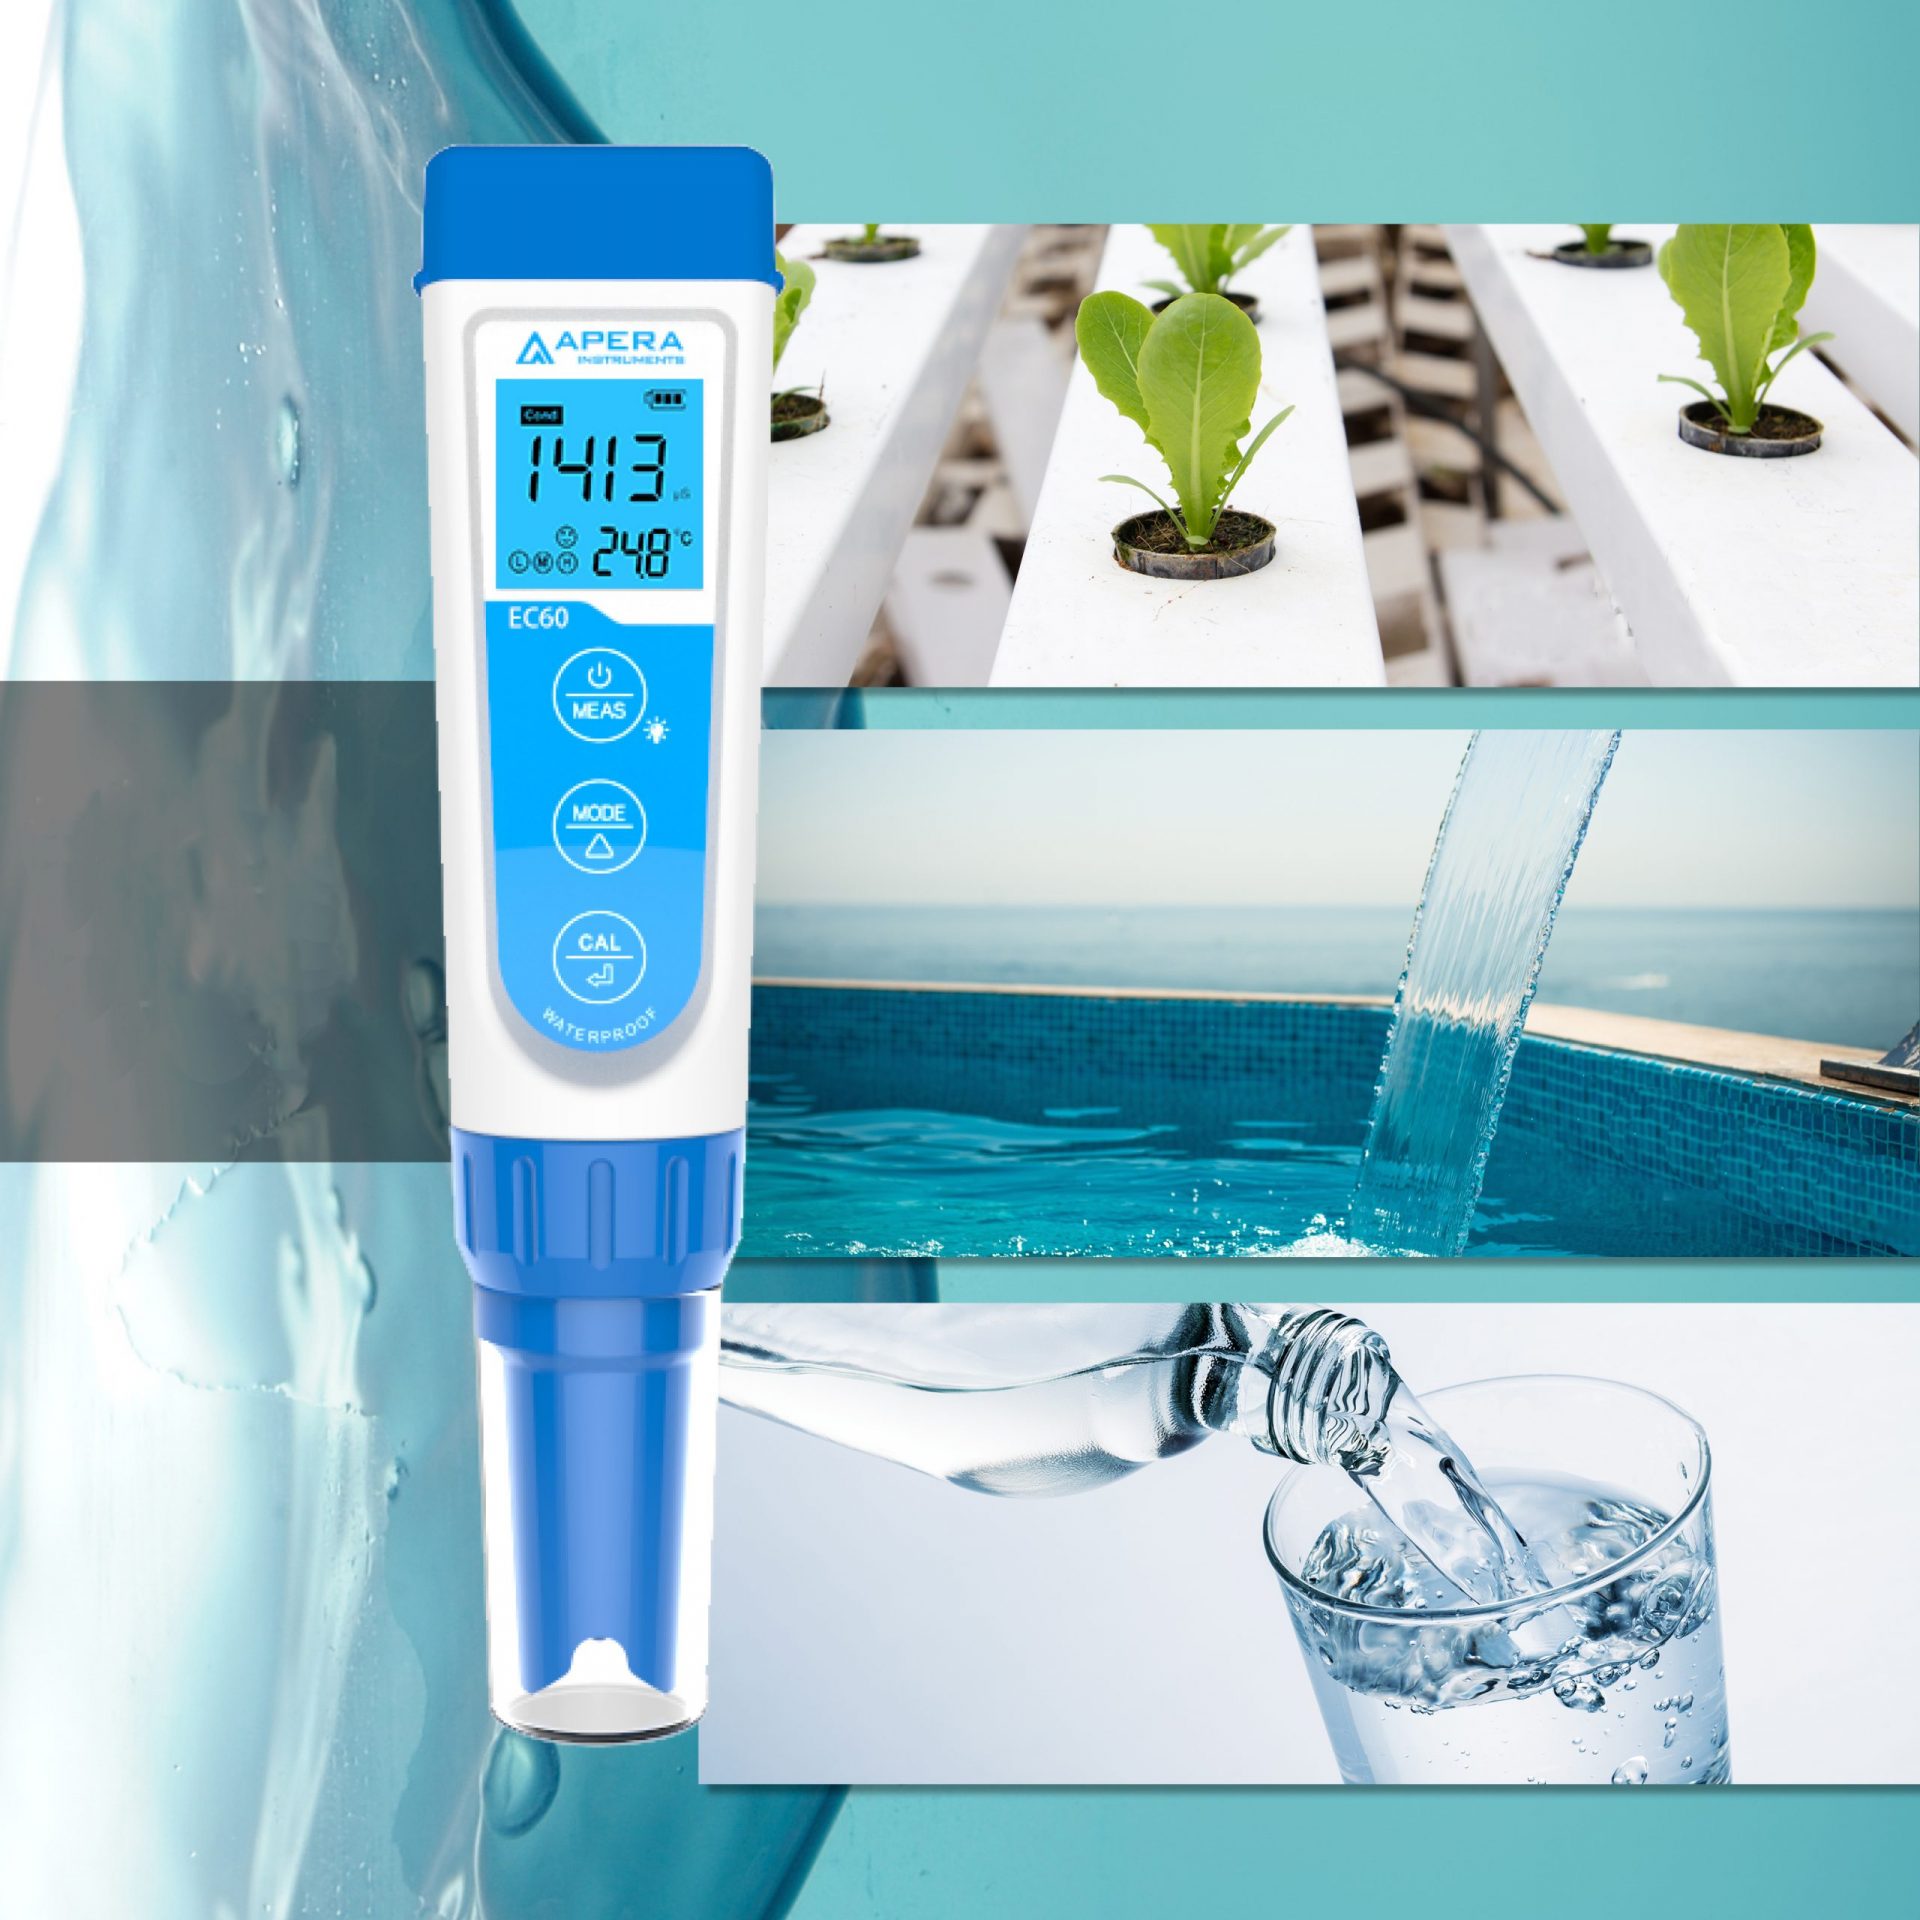 Easy Switch of EC/TDS/Salinity Apera Instruments EC60 Premium Waterproof Conductivity Pocket Tester Replaceable BPB Sensor ±1% F.S Accuracy